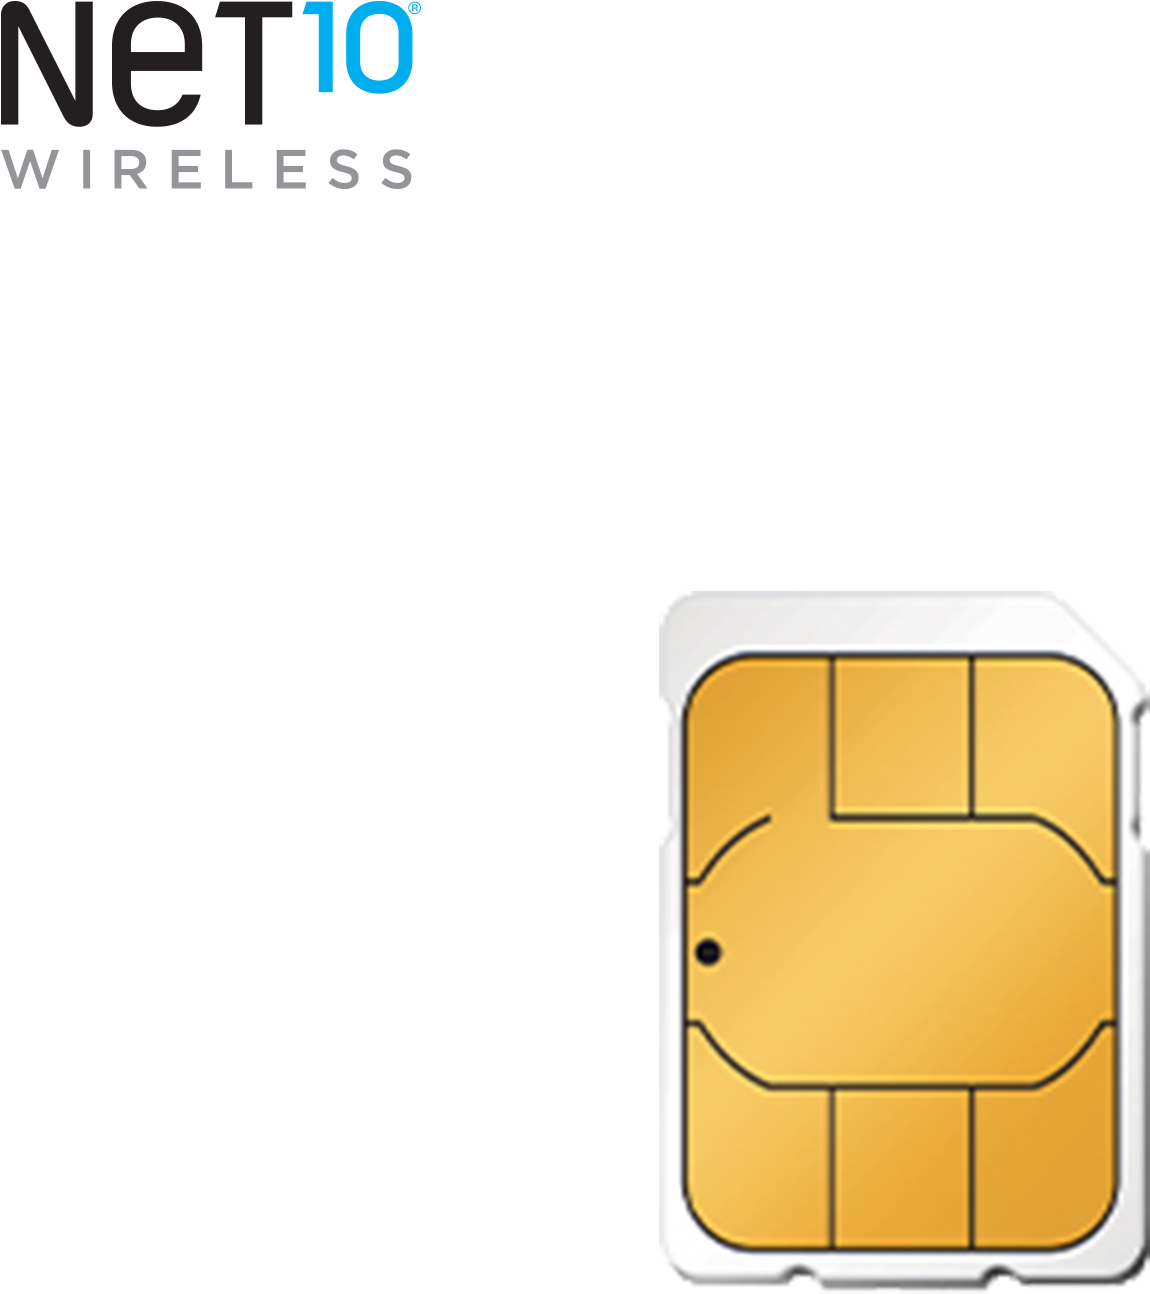 Net10 Wireless S I M Card PNG